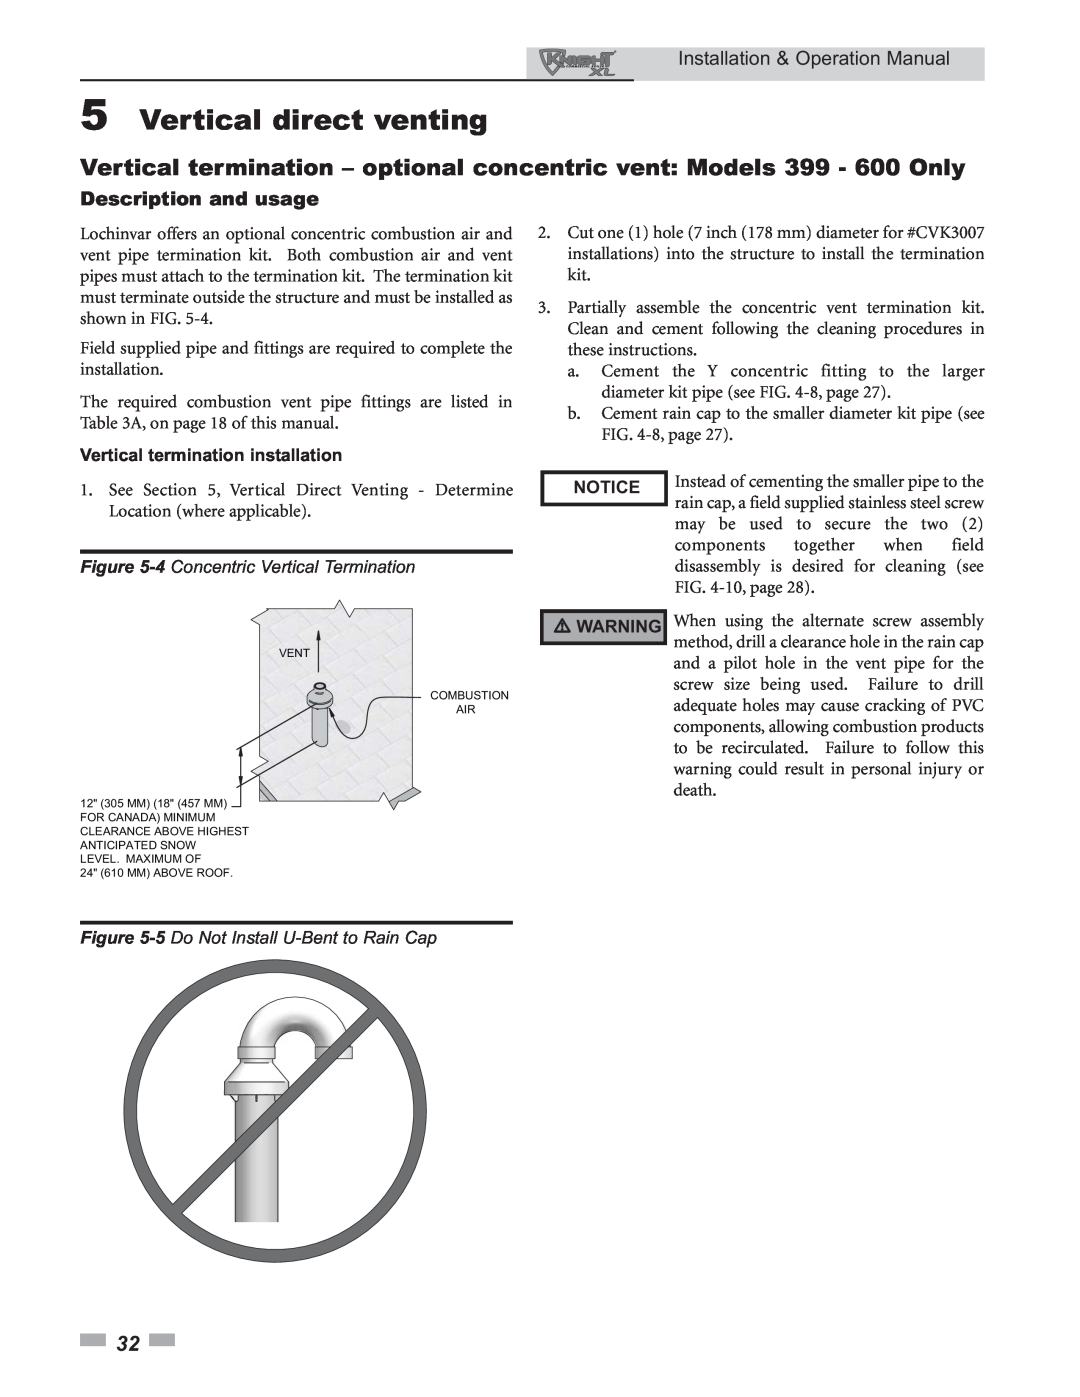 Lochinvar 399 operation manual 5Vertical direct venting, Installation & Operation Manual, Description and usage, Notice 